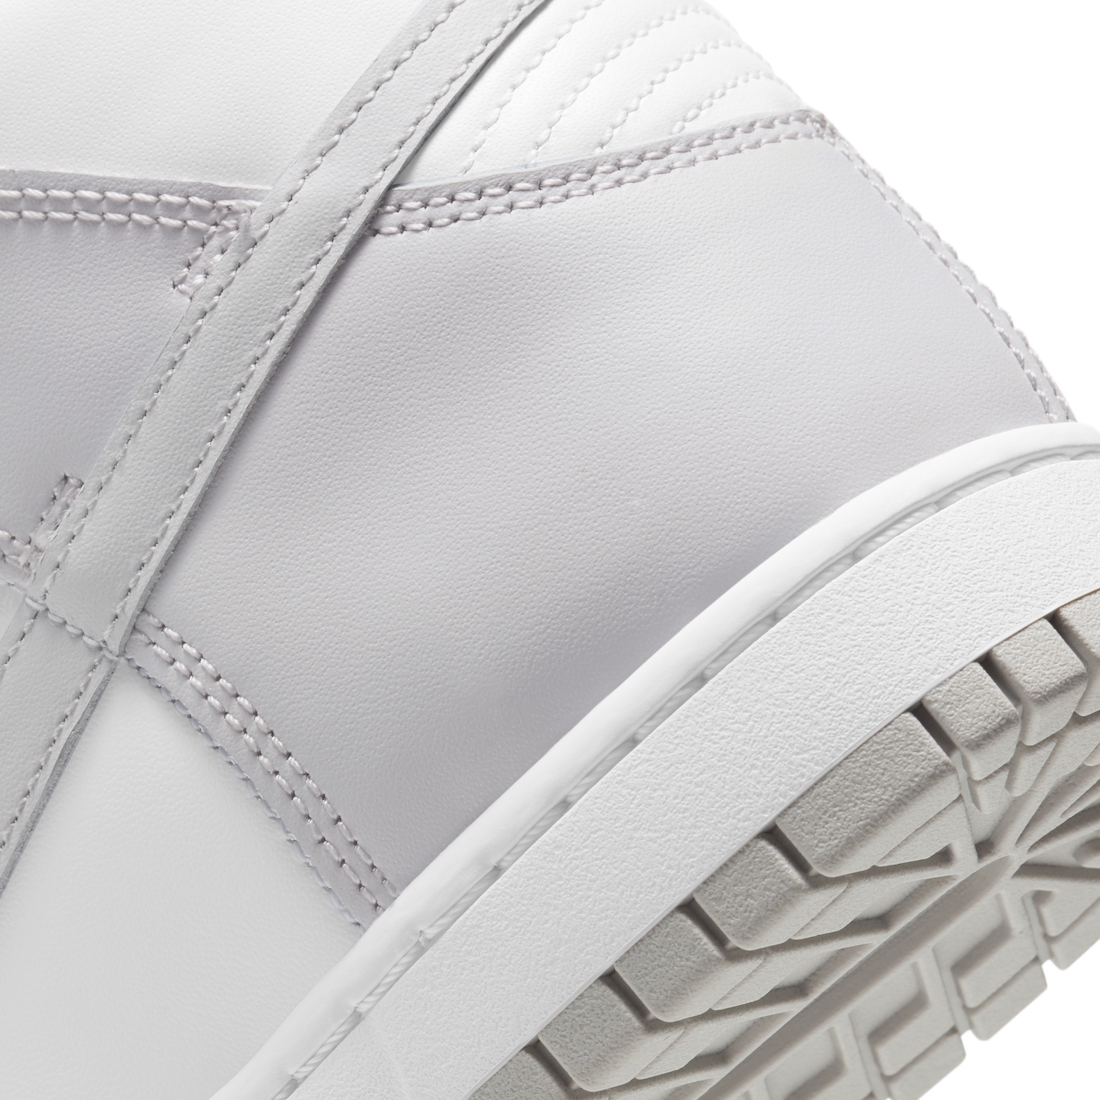 Nike Dunk High Vast Grey DD1399-100 2021 Release Date